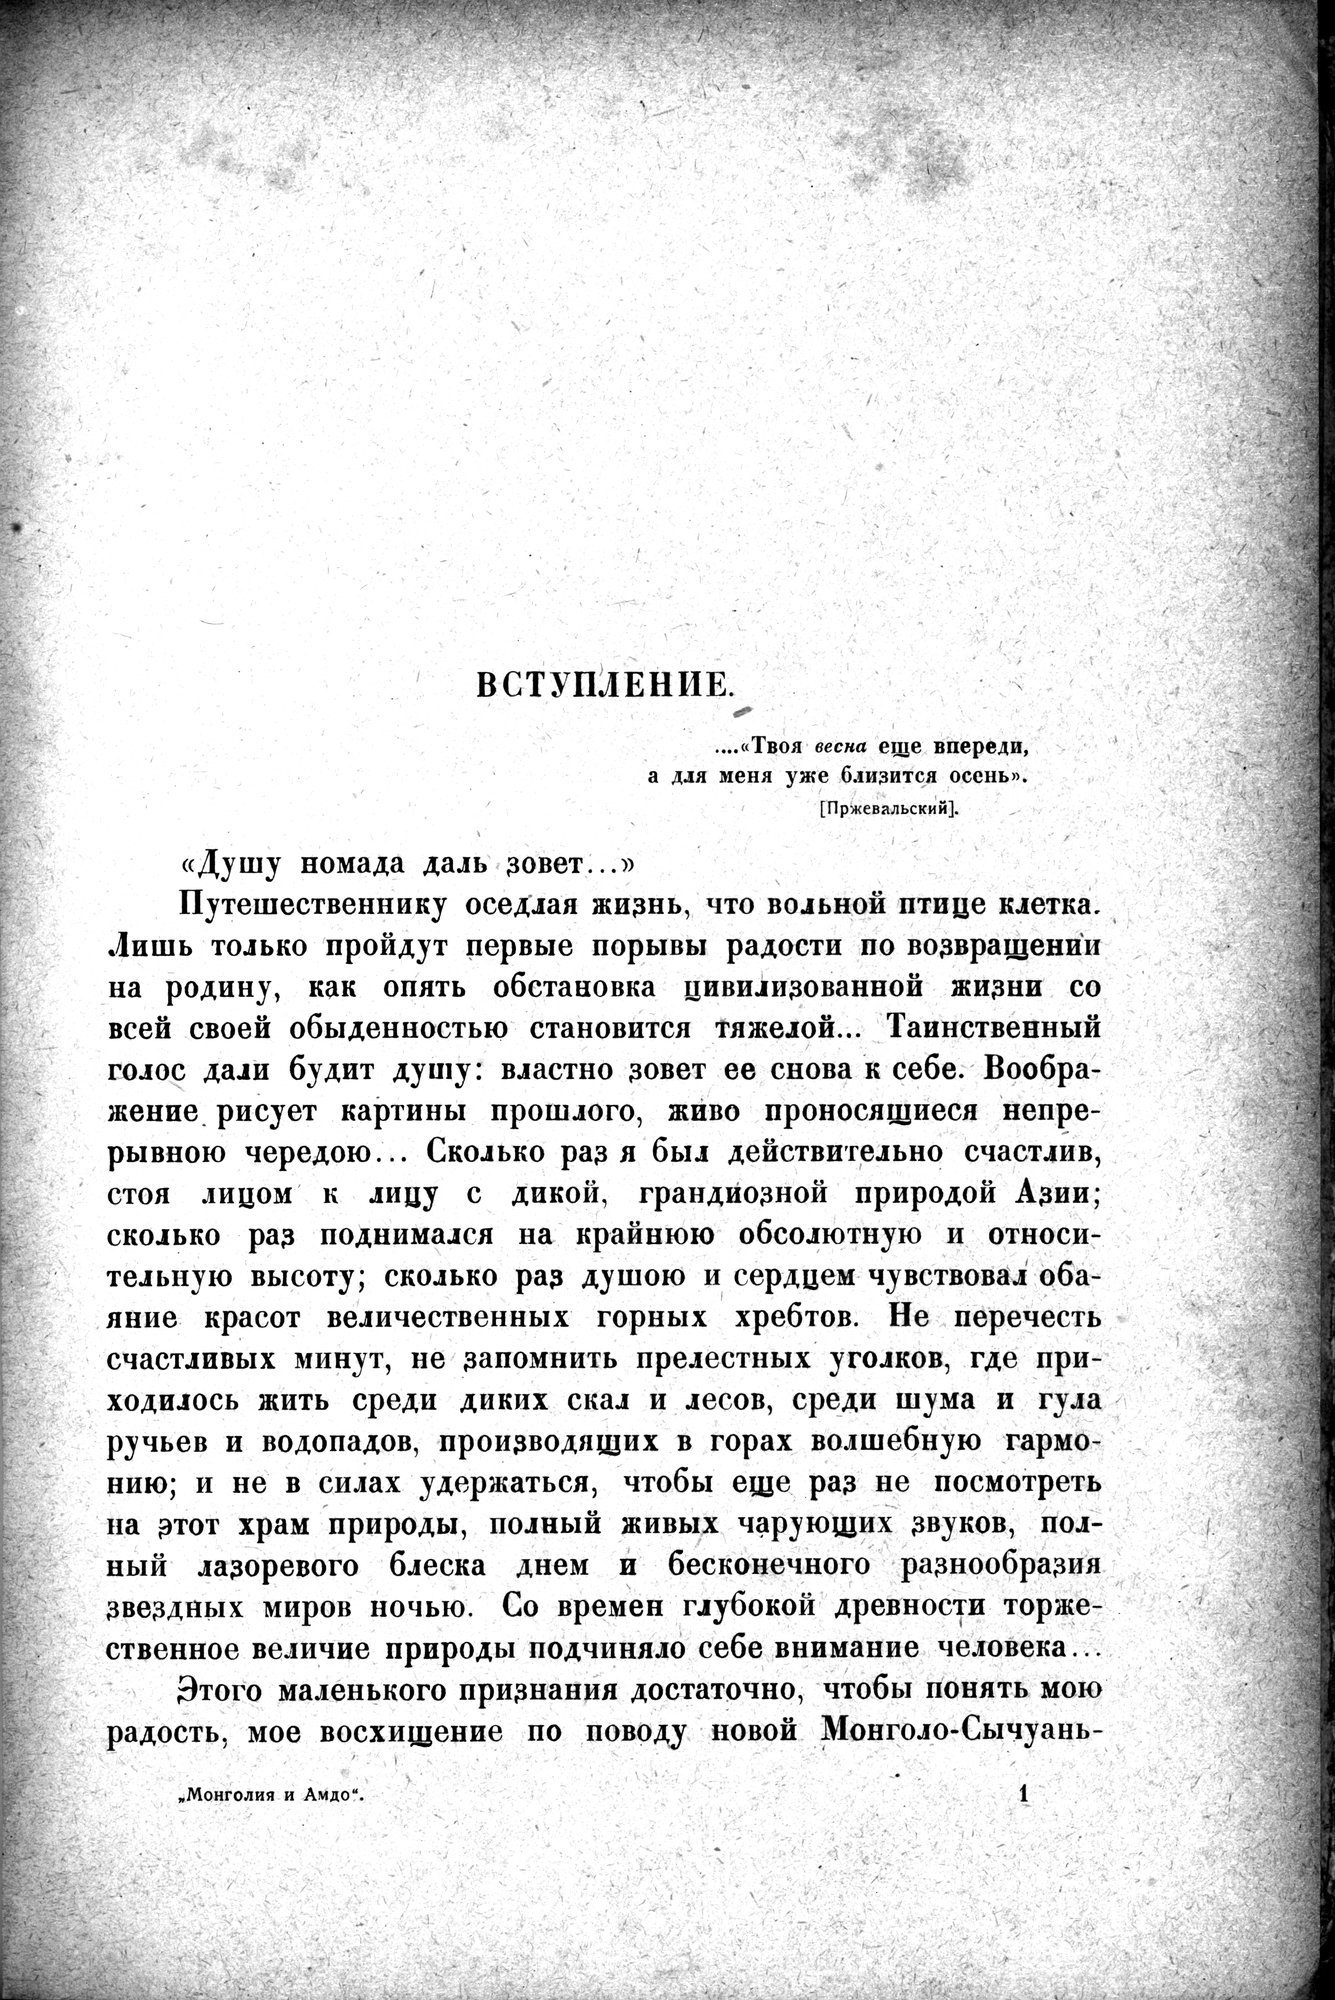 Mongoliya i Amdo i mertby gorod Khara-Khoto : vol.1 / Page 15 (Grayscale High Resolution Image)